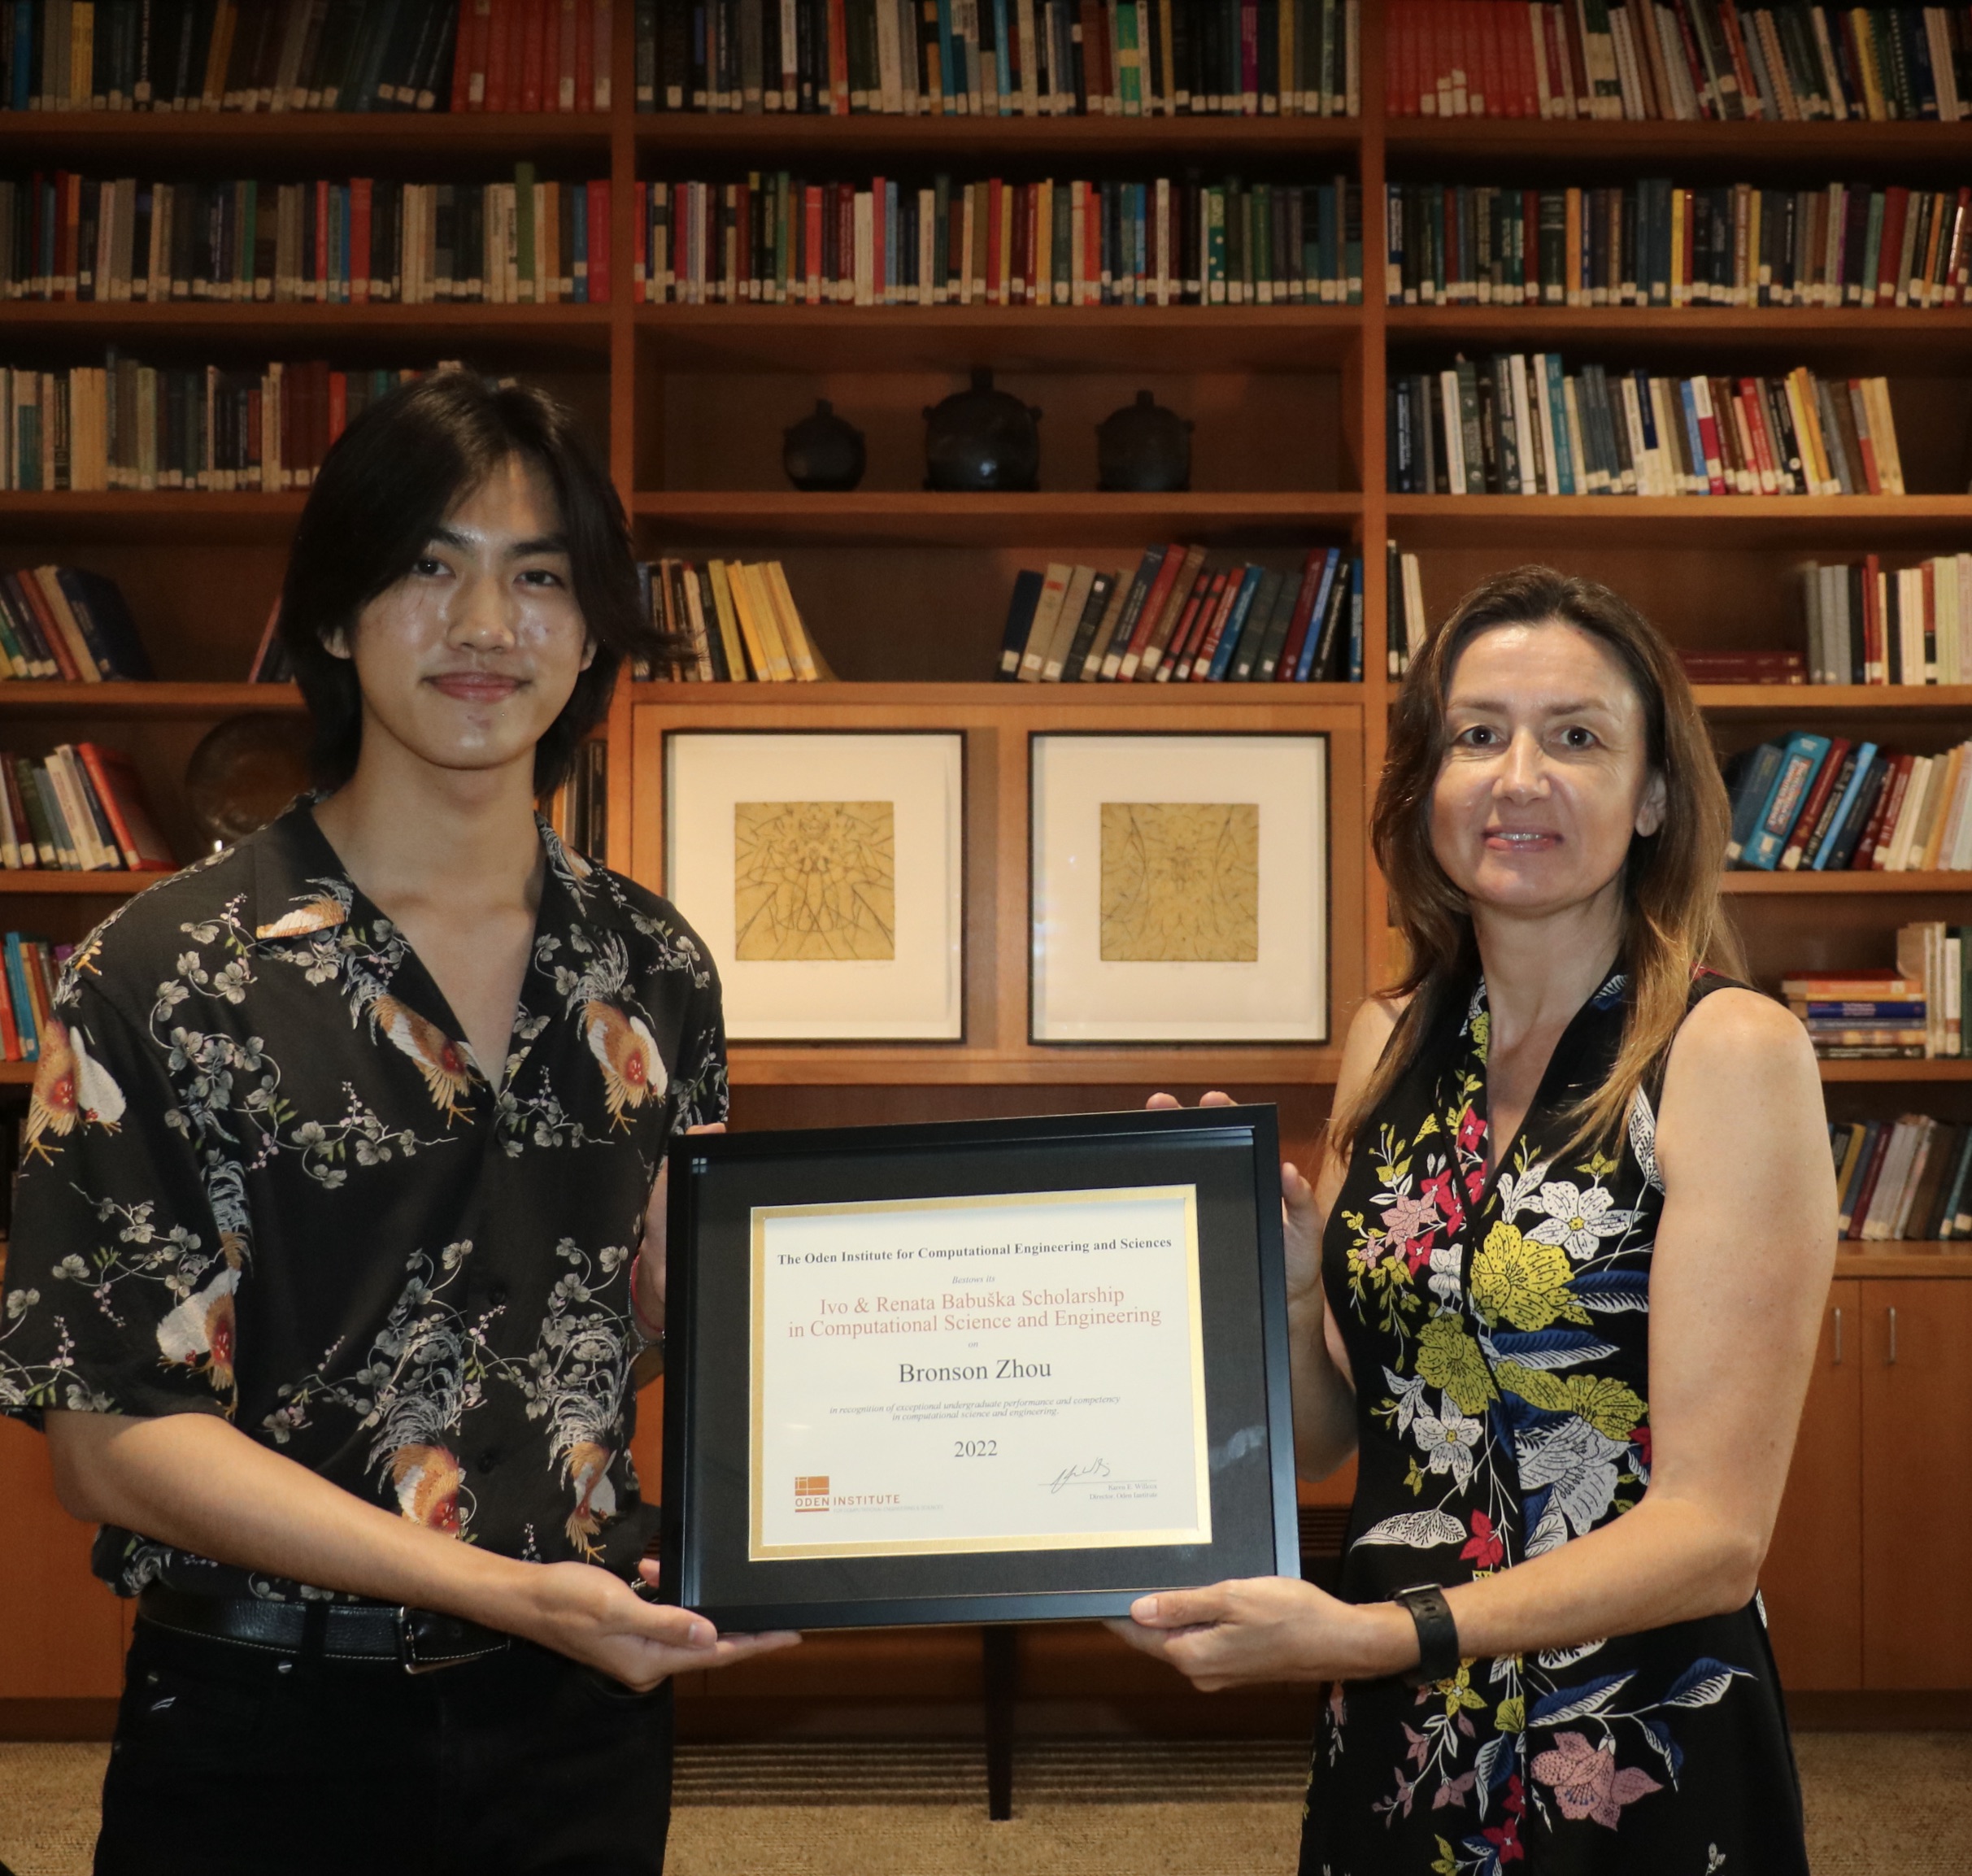 Bronson Zhou receiving his award from Karen Willcox in May.